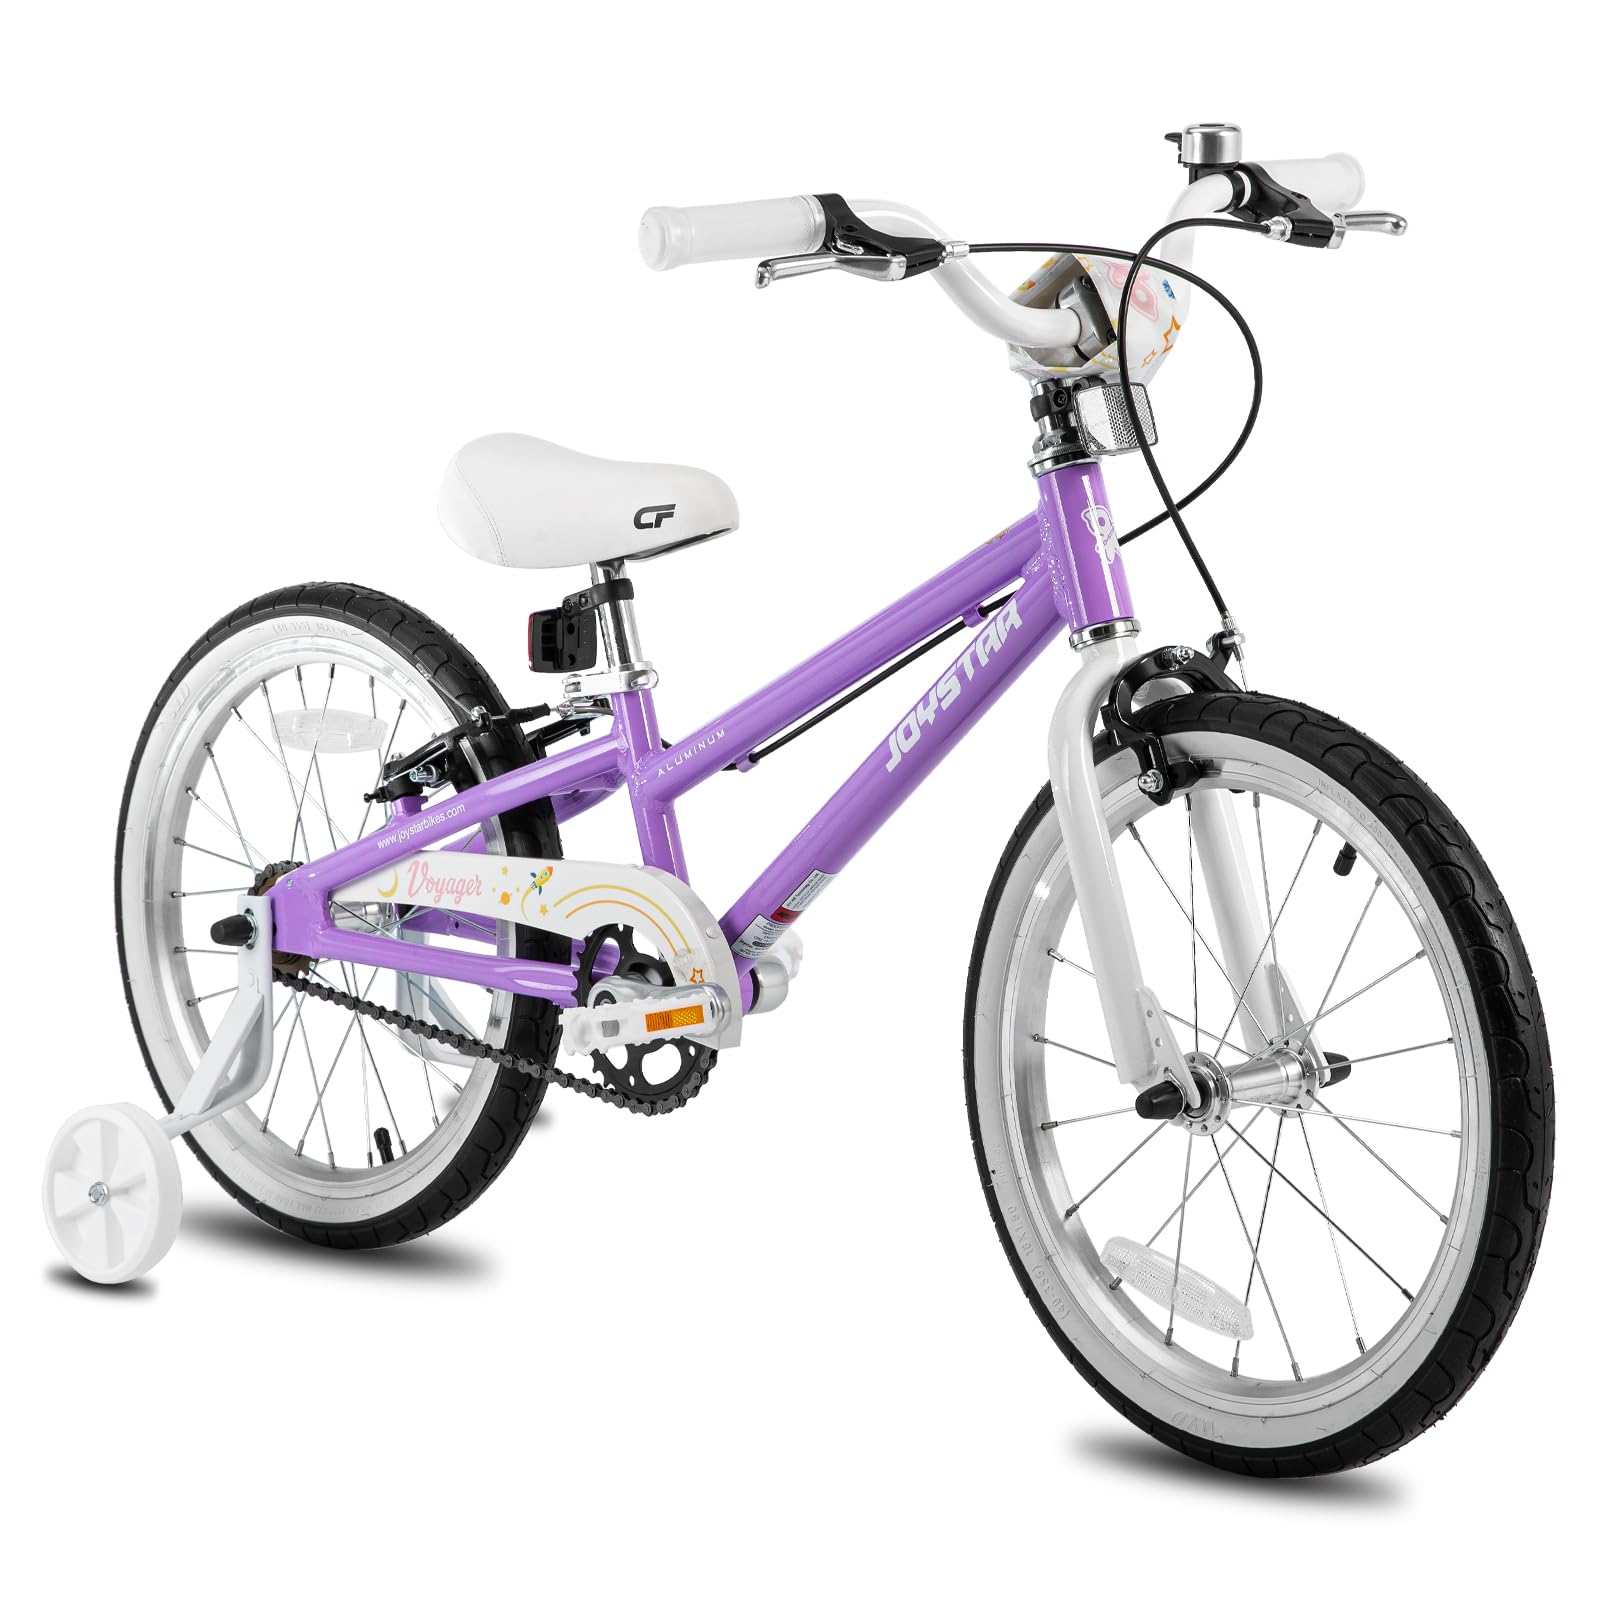 JOYSTAR Voyager 18 Inch Girls Bike with Training Wheels Lightweight Aluminum Frame Girls Bikes Ages 5-8 Years Kids' Bicycle Purple